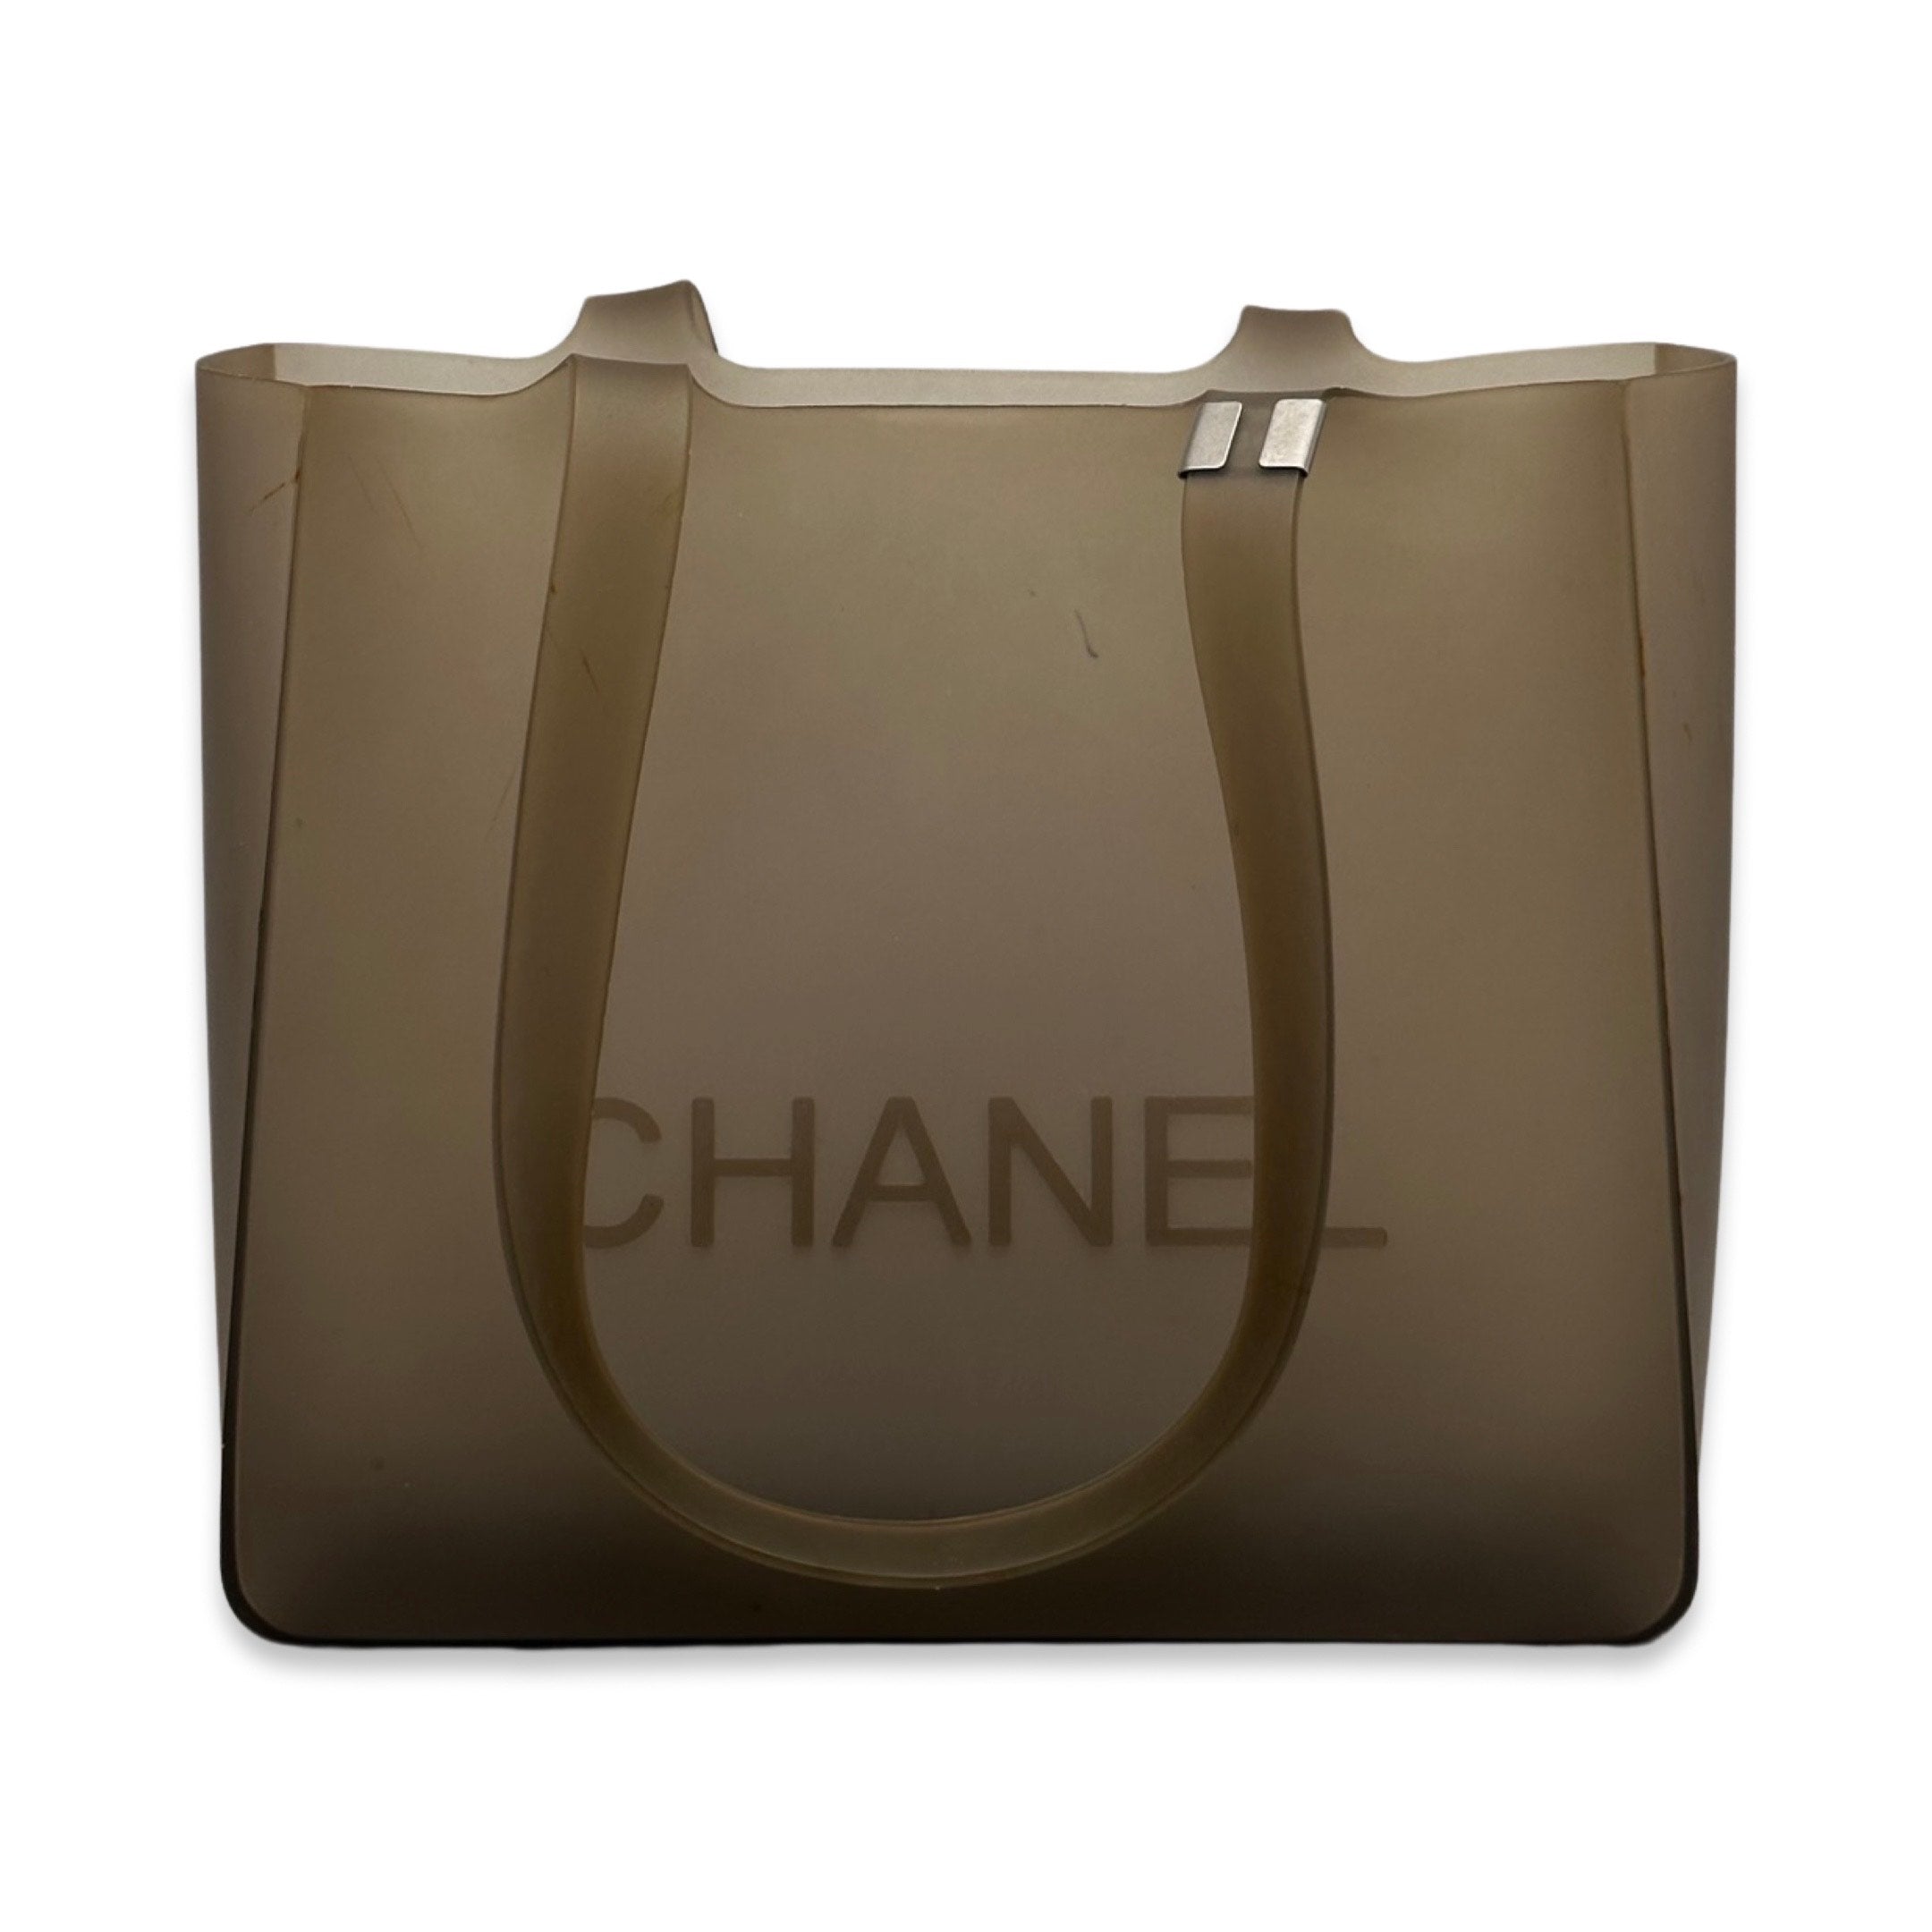 CHANEL Clear Bags & Handbags for Women